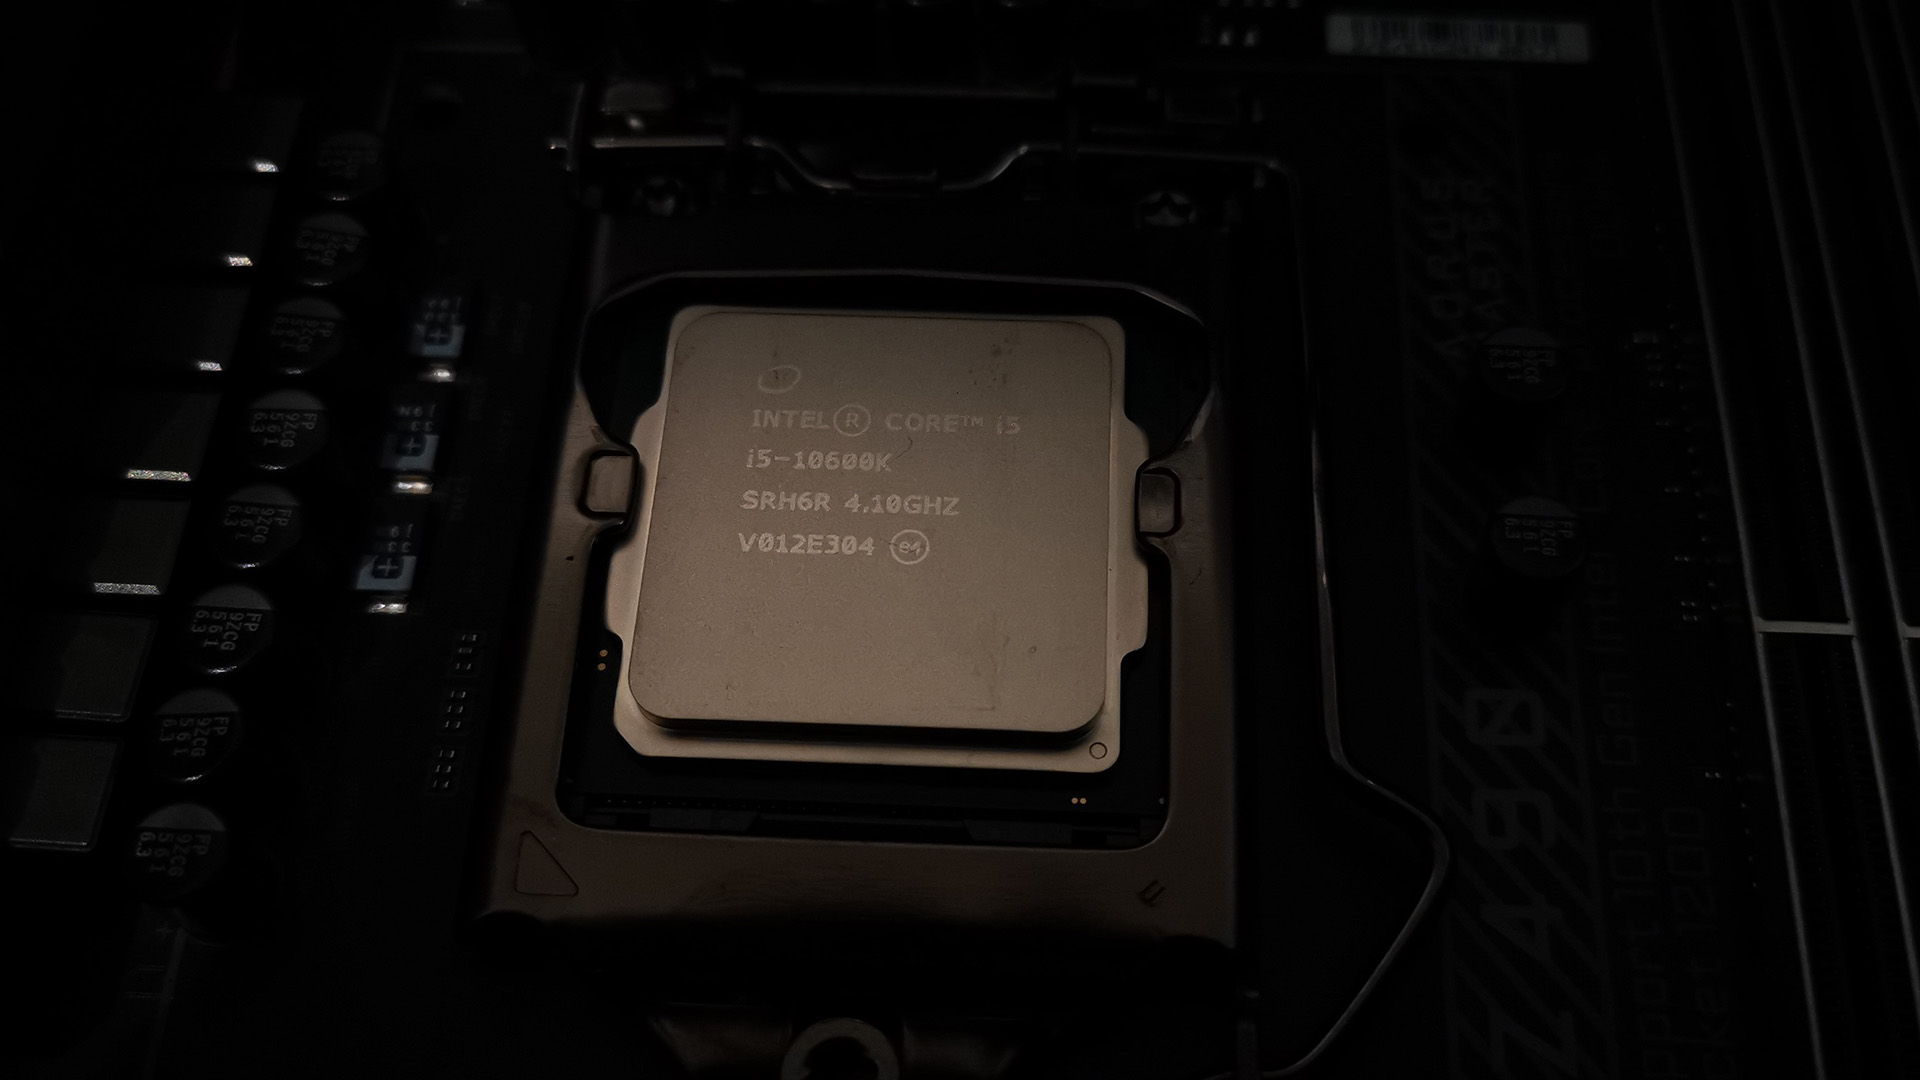 Intel i9 and i5 CPUs